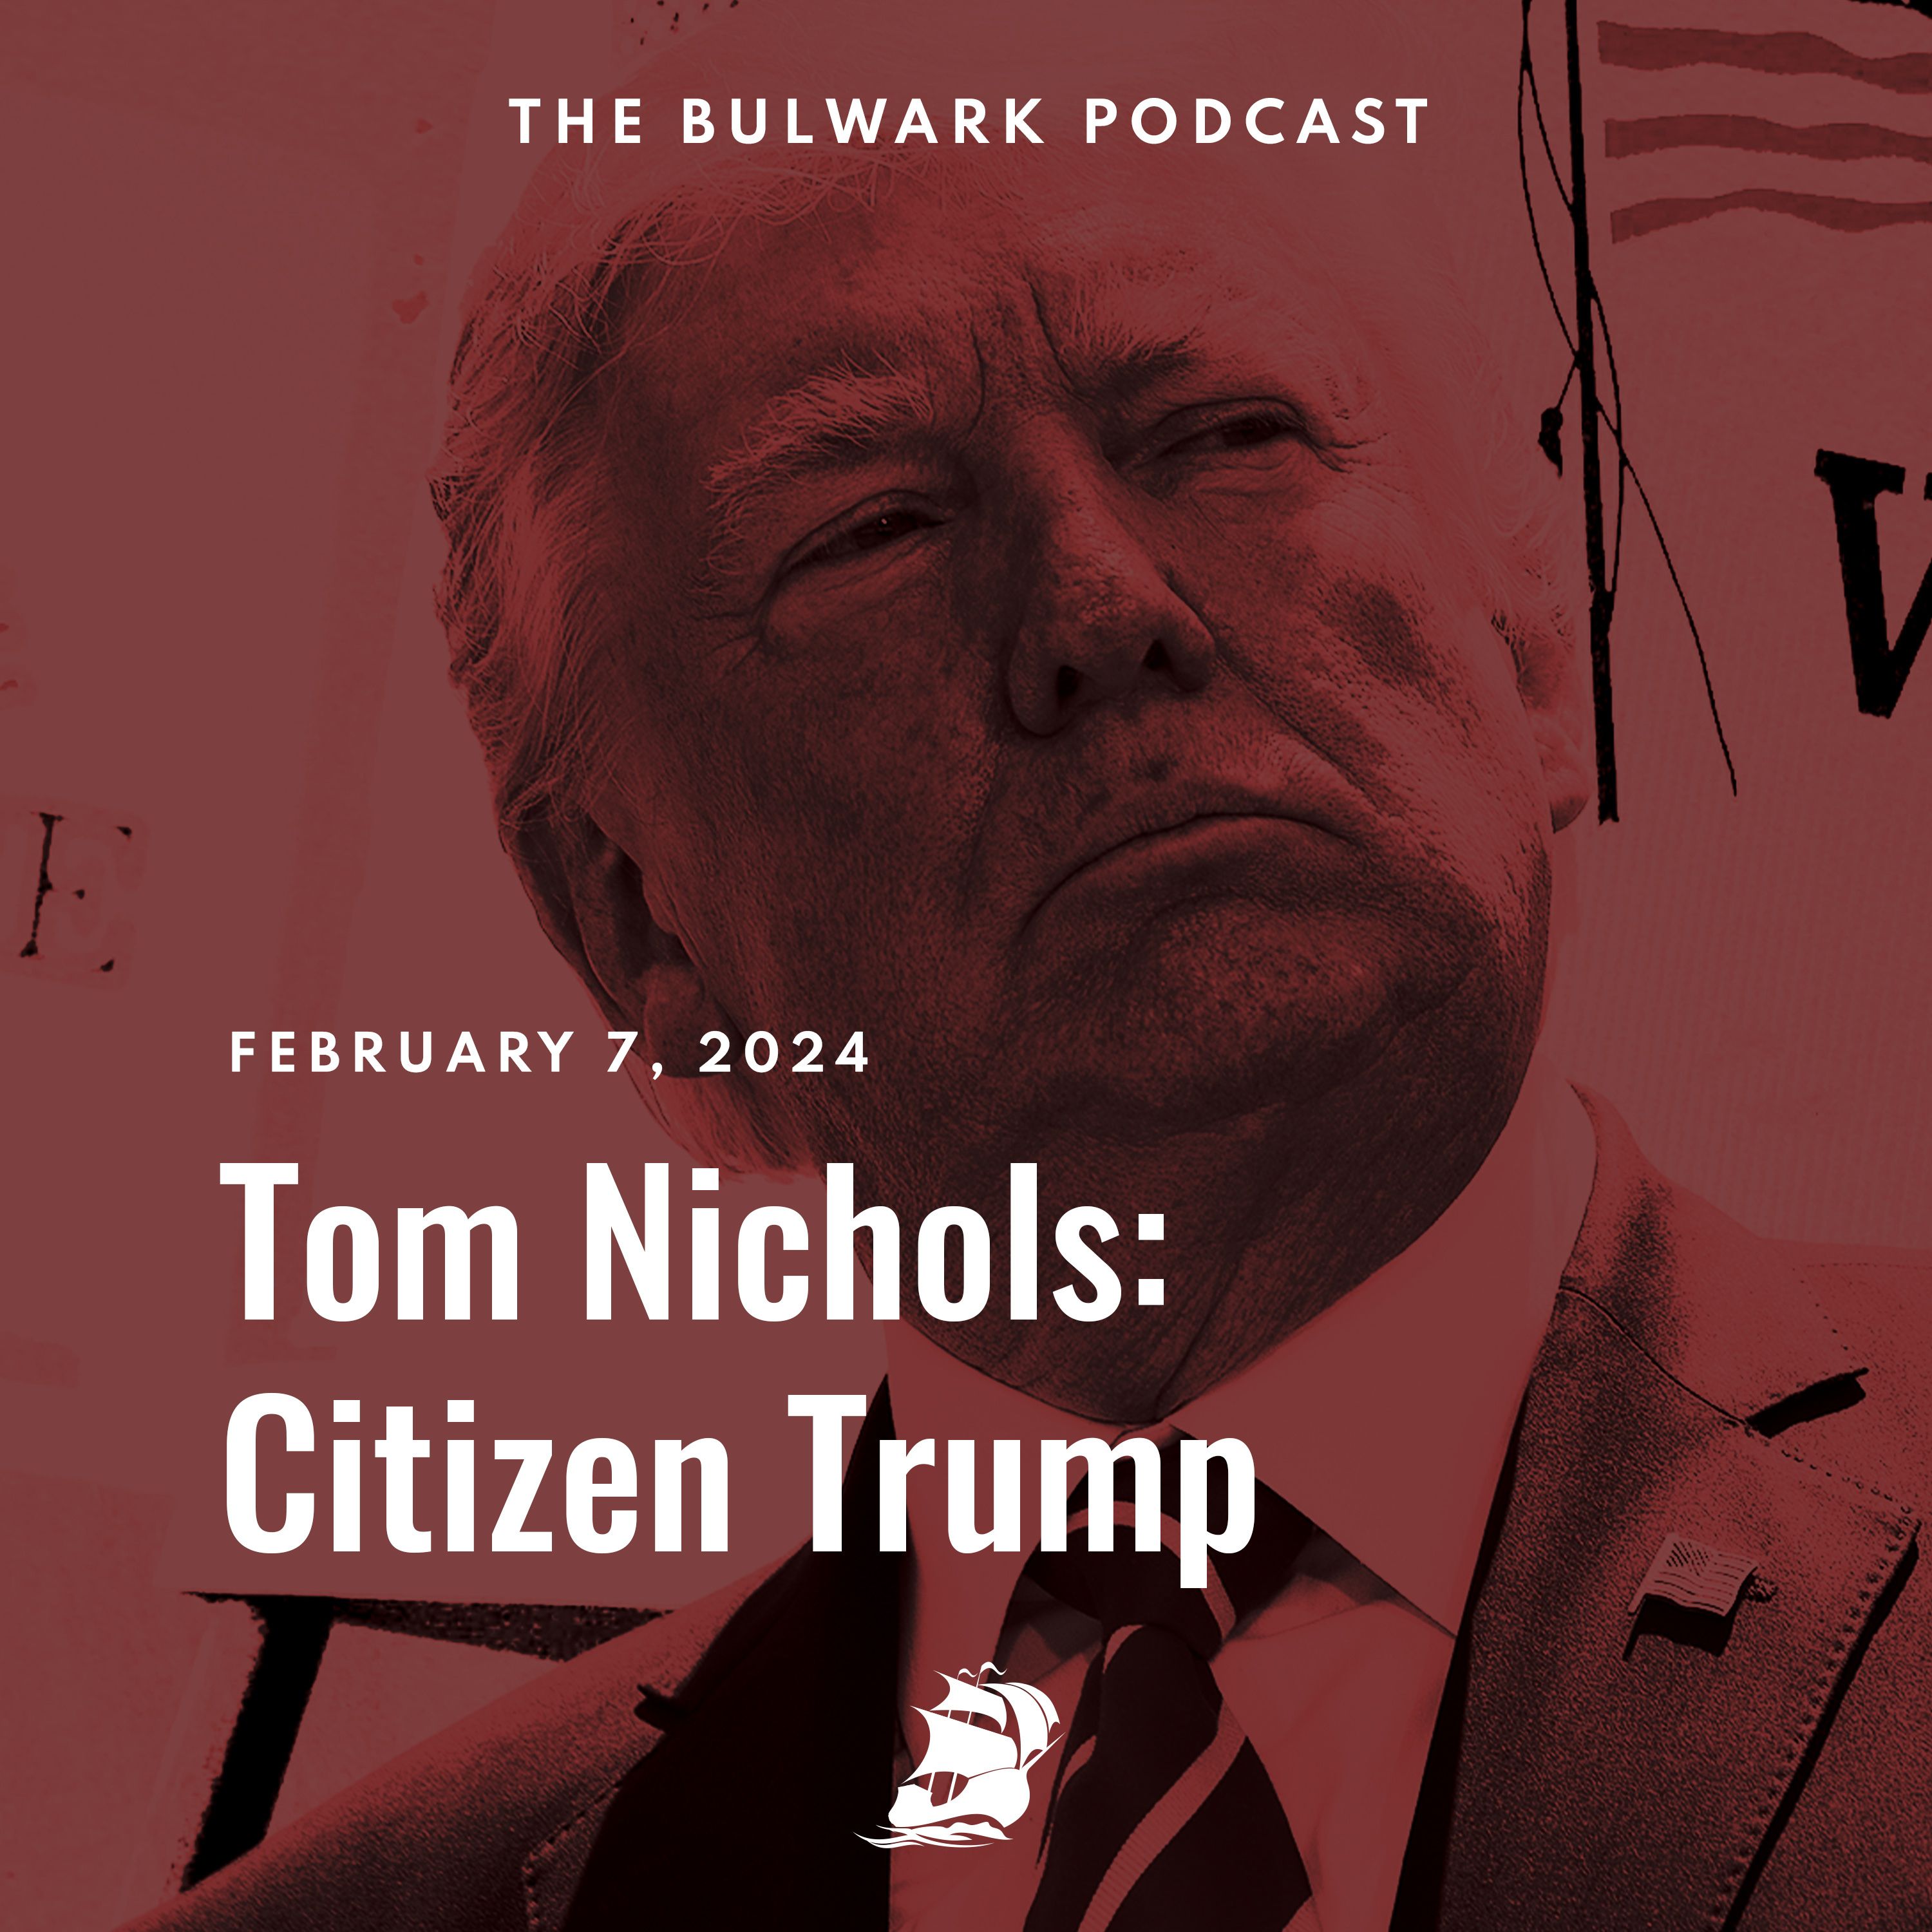 Tom Nichols: Citizen Trump by The Bulwark Podcast